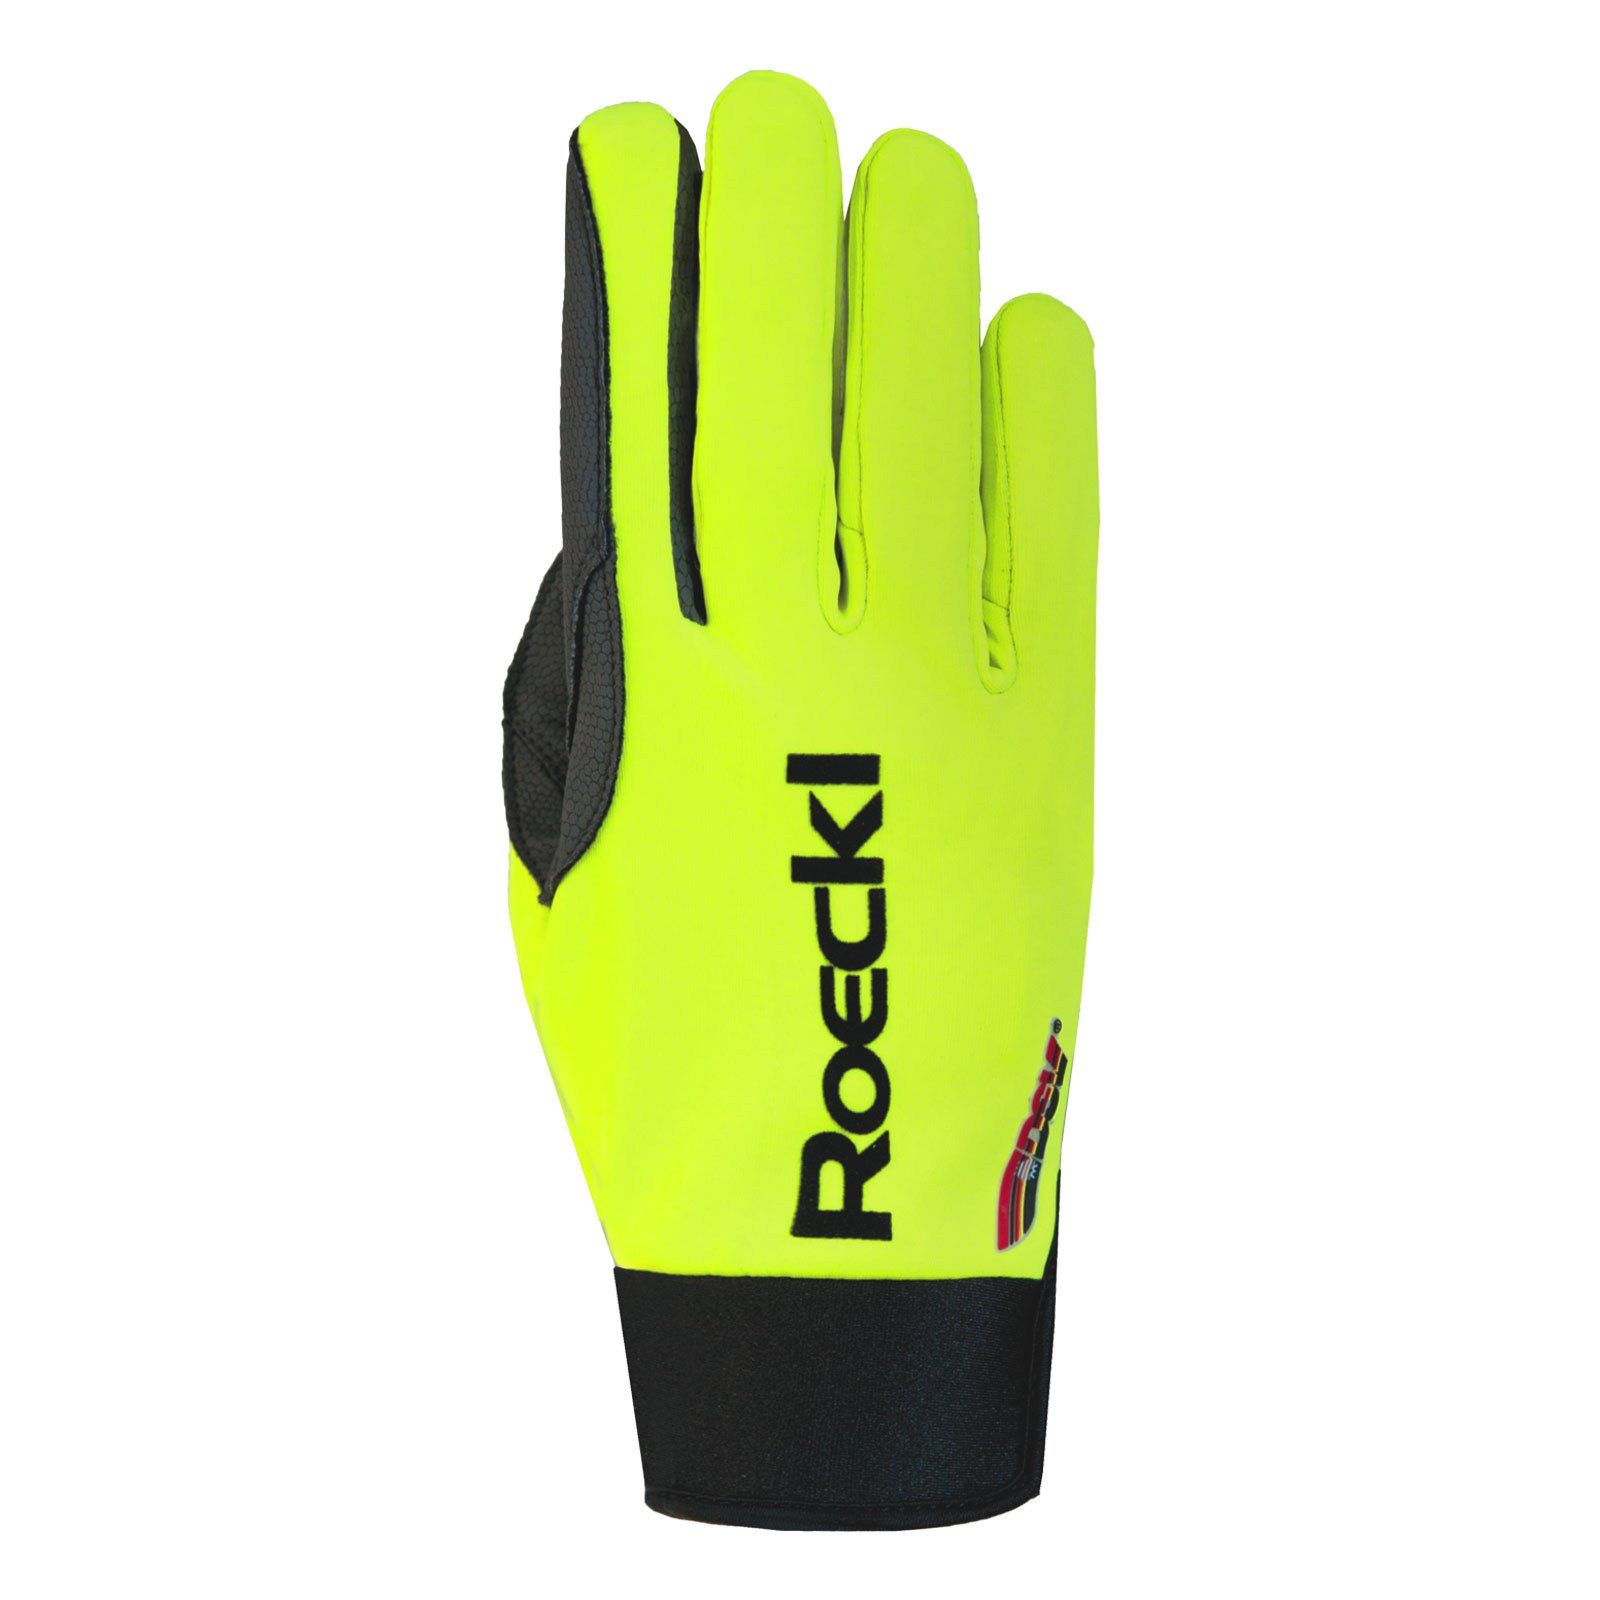 Roeckl SPORTS Langlaufhandschuhe Lit Original DSV (Deutscher Skiverband) Handschuh 0215 neon yellow